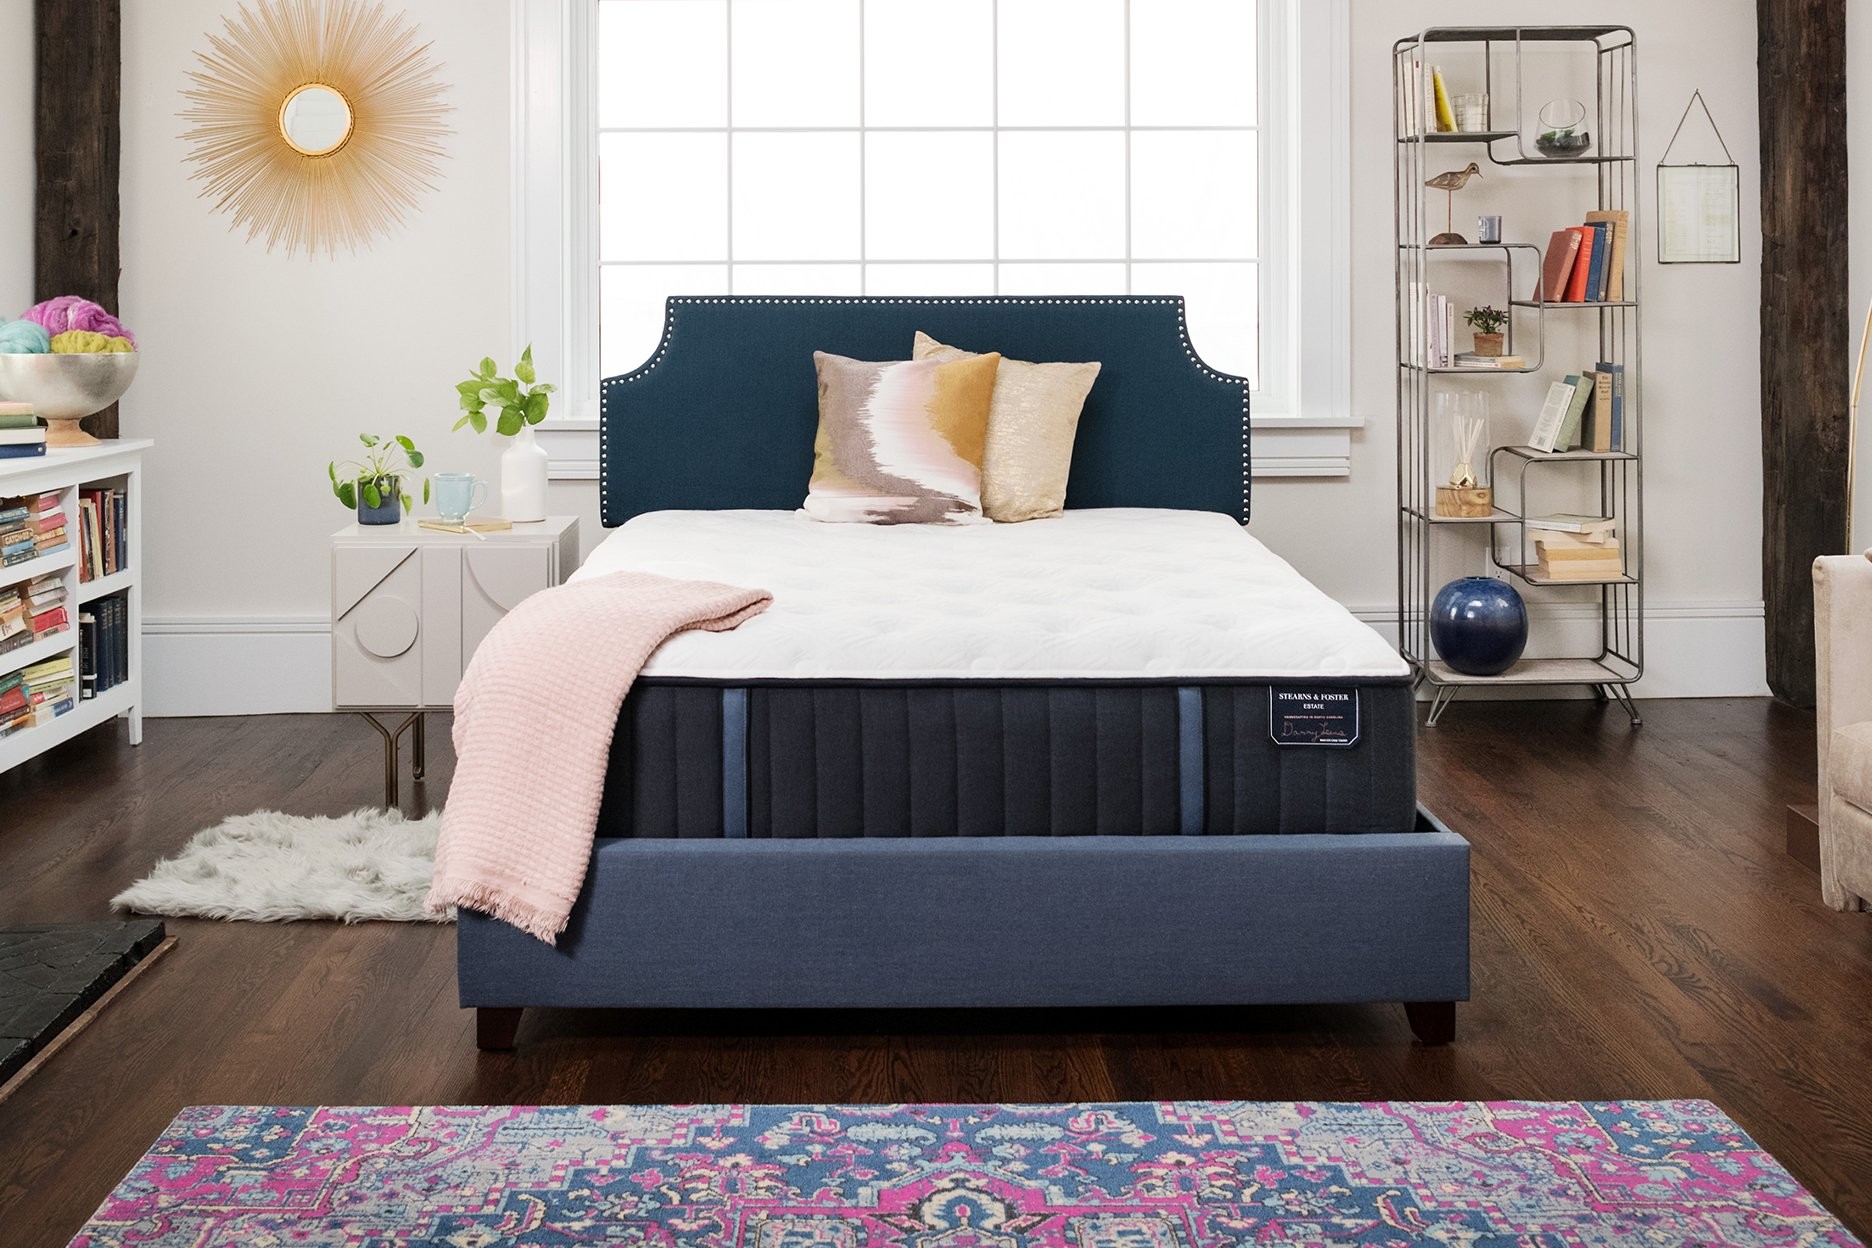 sterns and foster hybrid mattress reviews